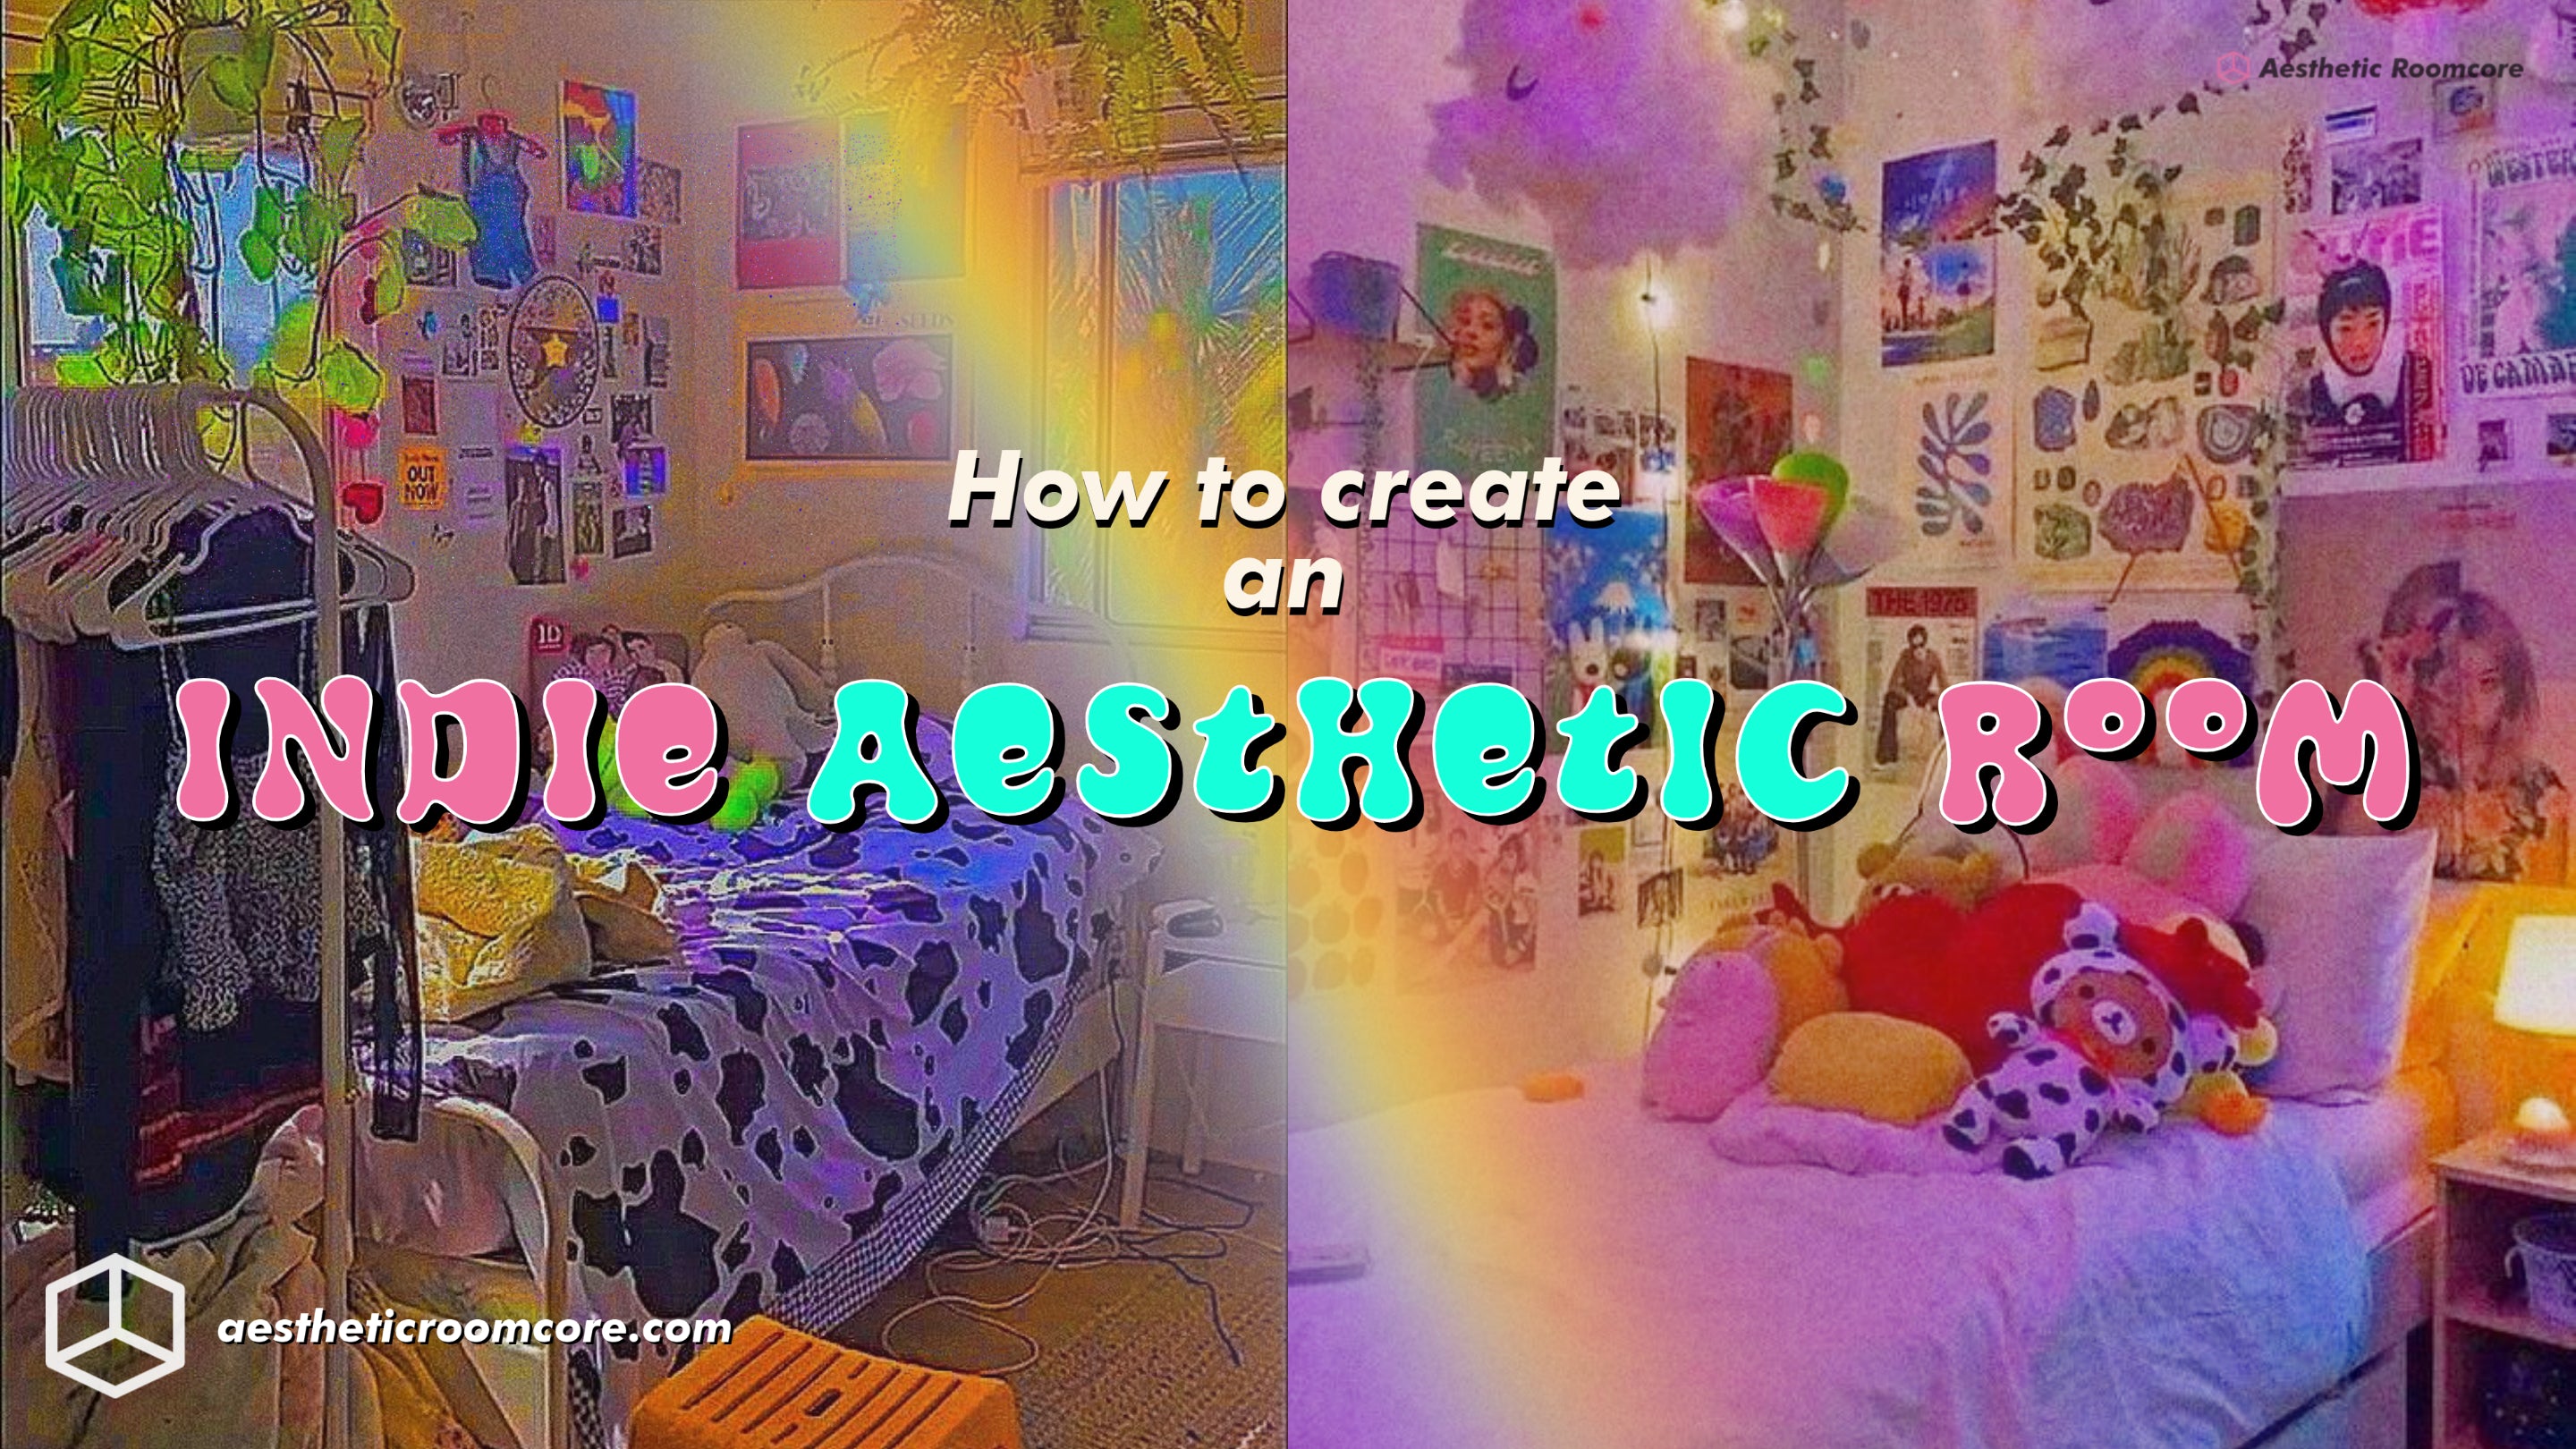 How To Create An Aesthetic Room Decor?